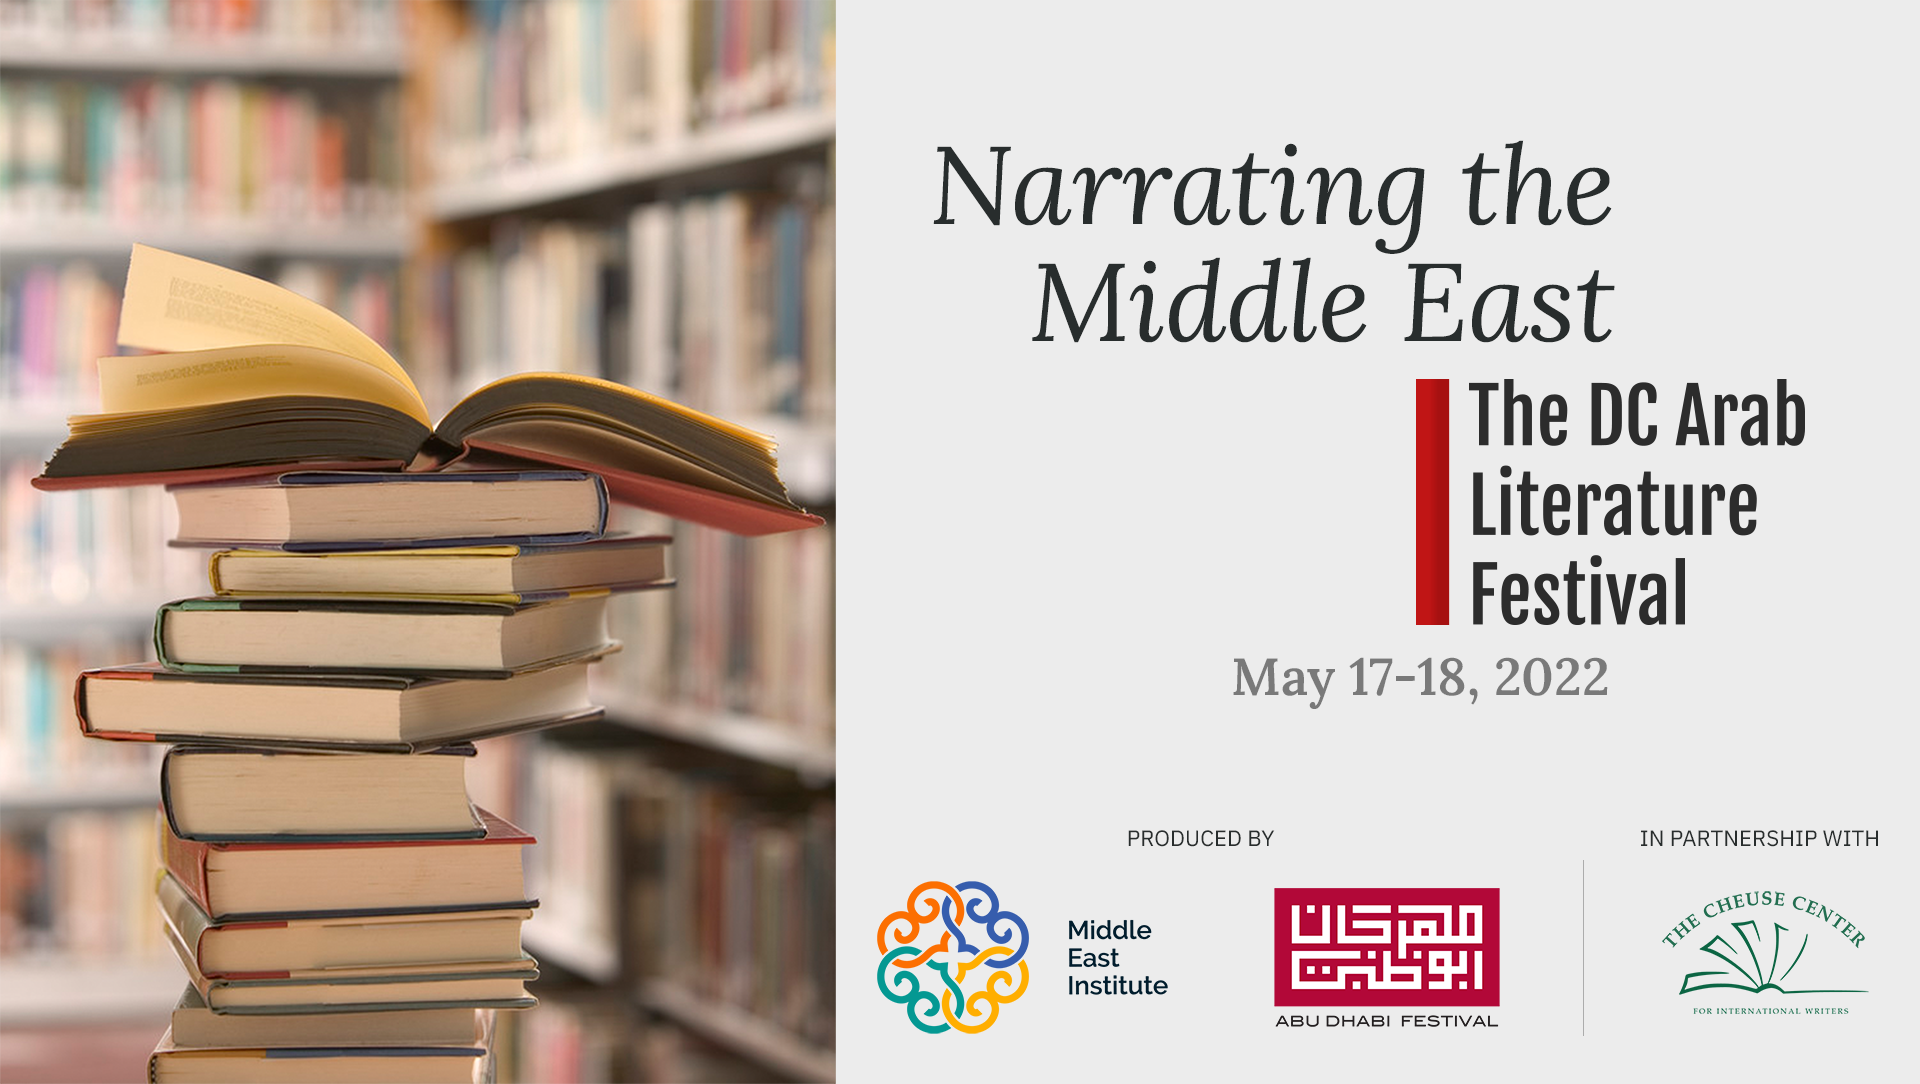 2022 DC Arab Literature Festival, May 17-18, 2022